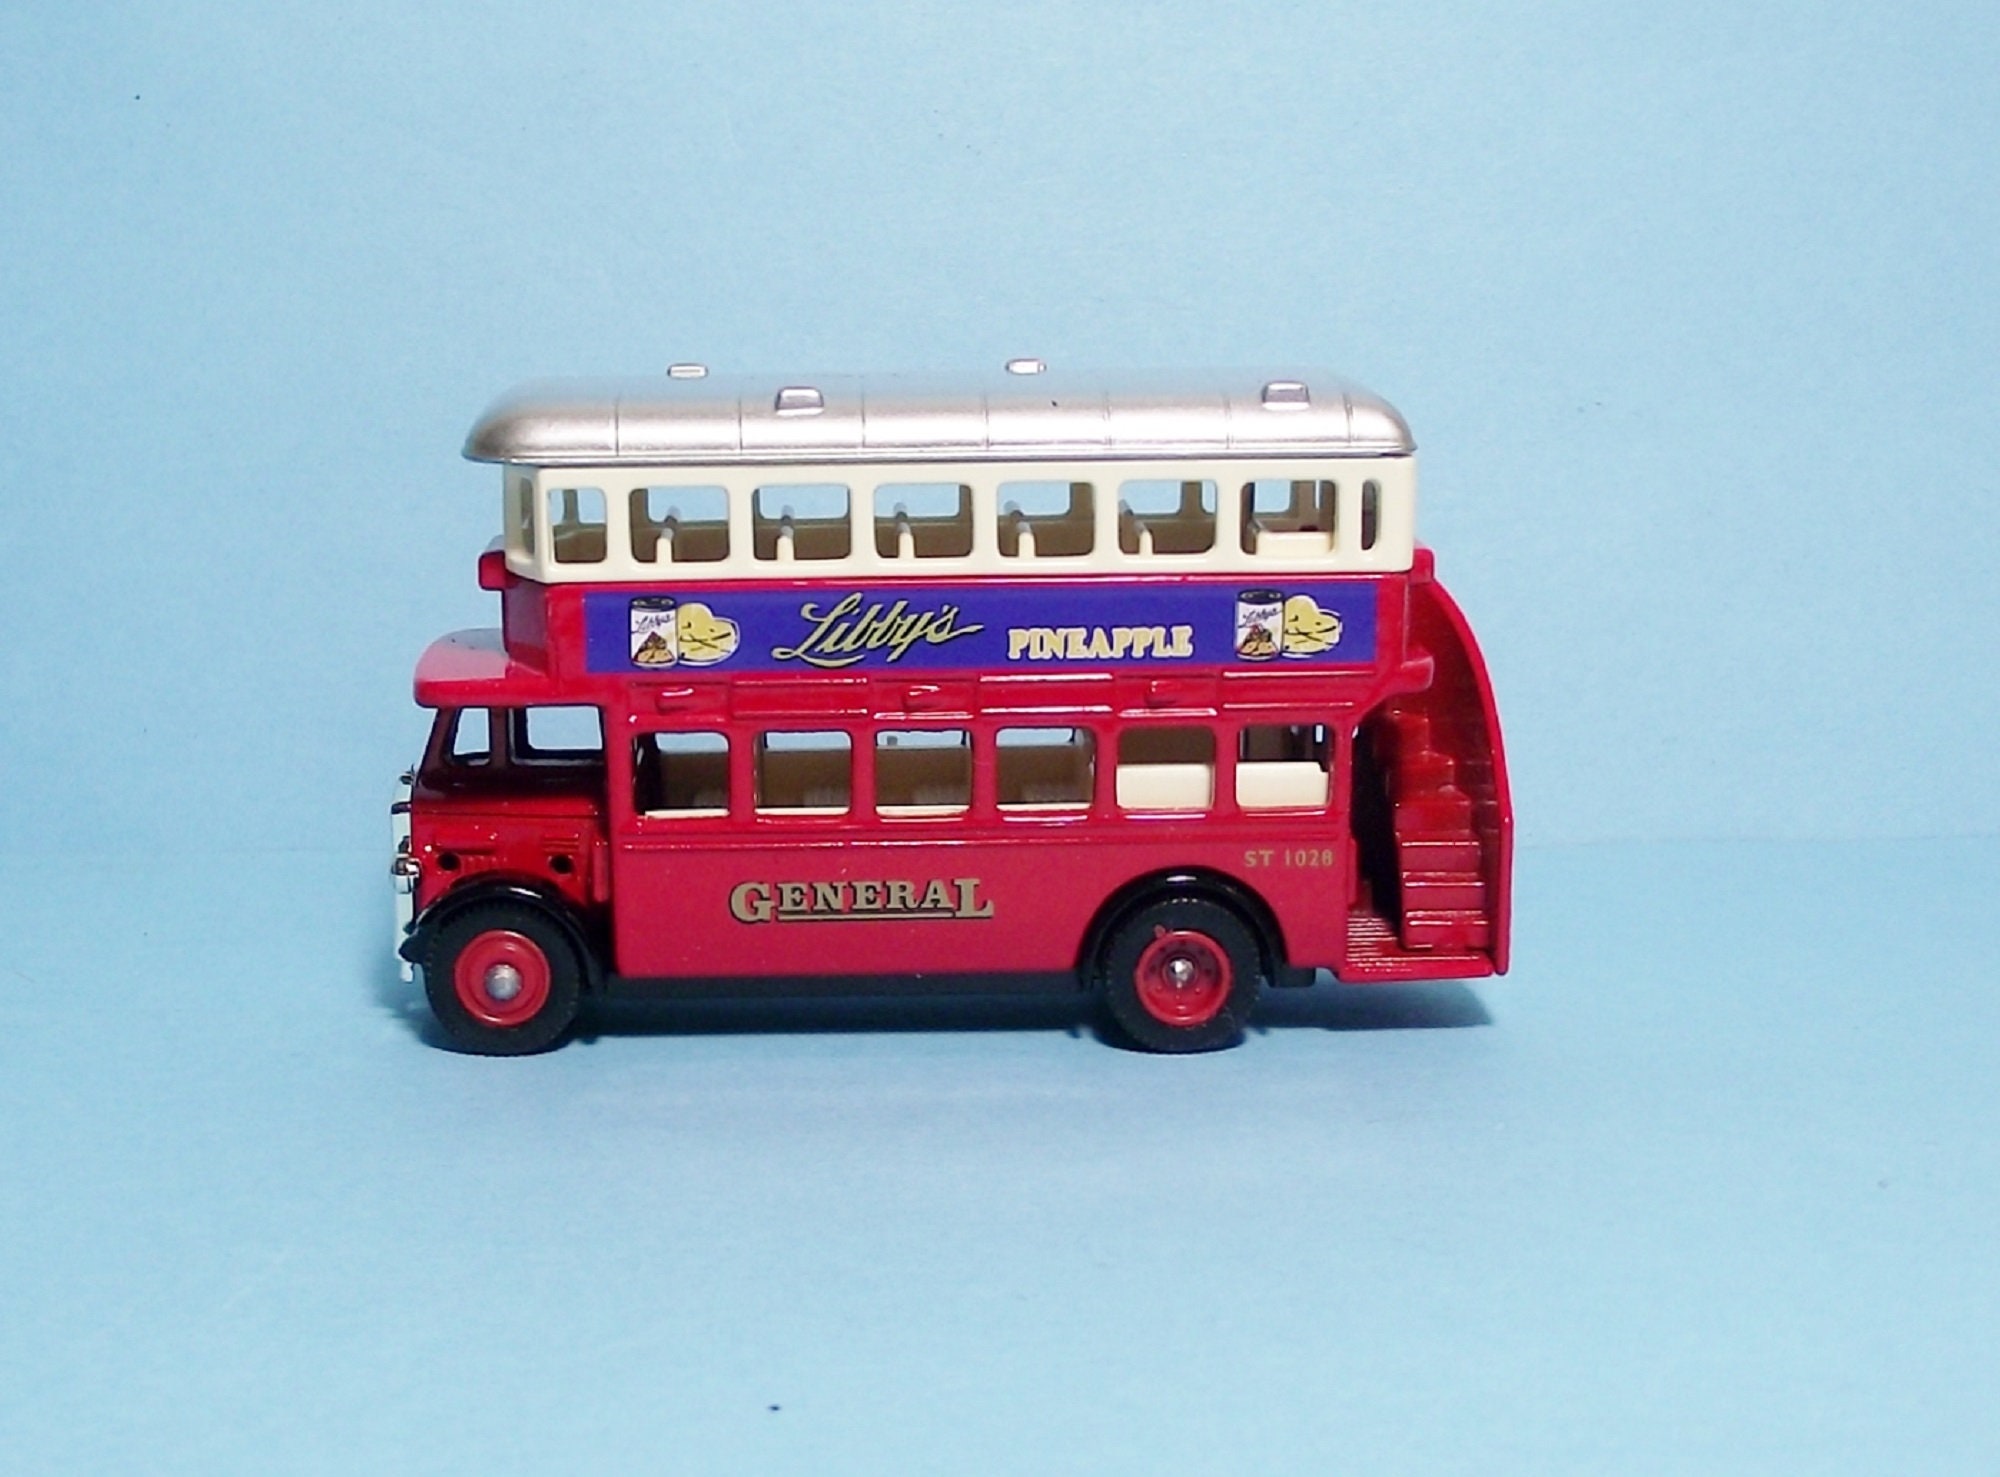 Vintage Lledo London Double Decker Bus Made in England Days Gone Die Cast 